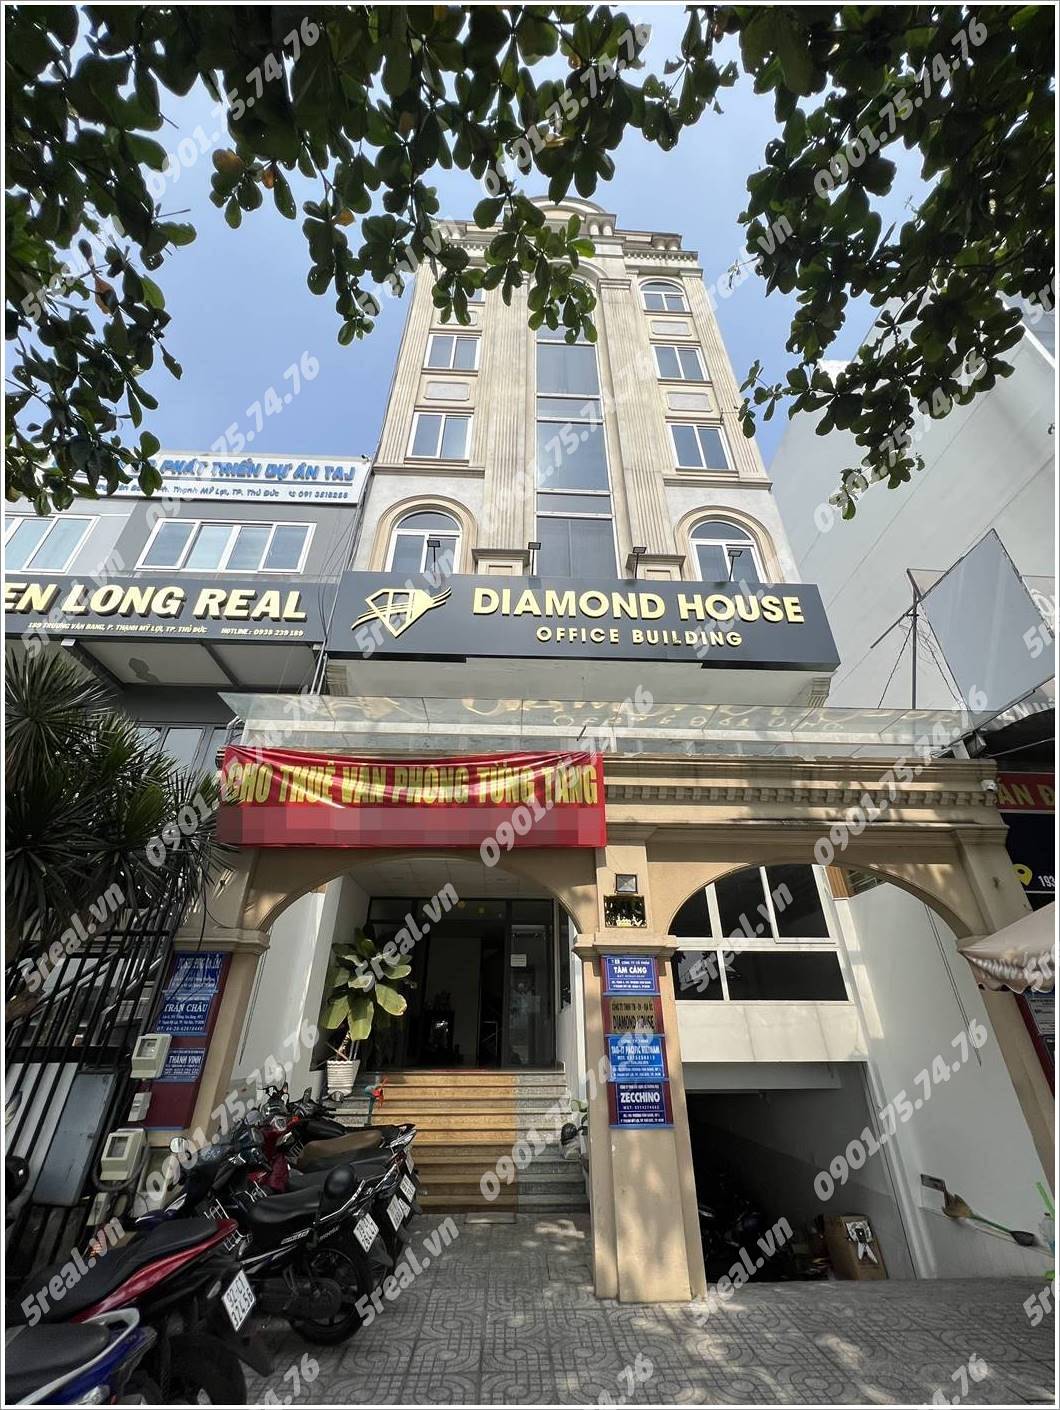 diamond-house-office-building-truong-van-bang-cho-thue-van-phong-quan-2-thanh-pho-thu-duc-5real.vn-01